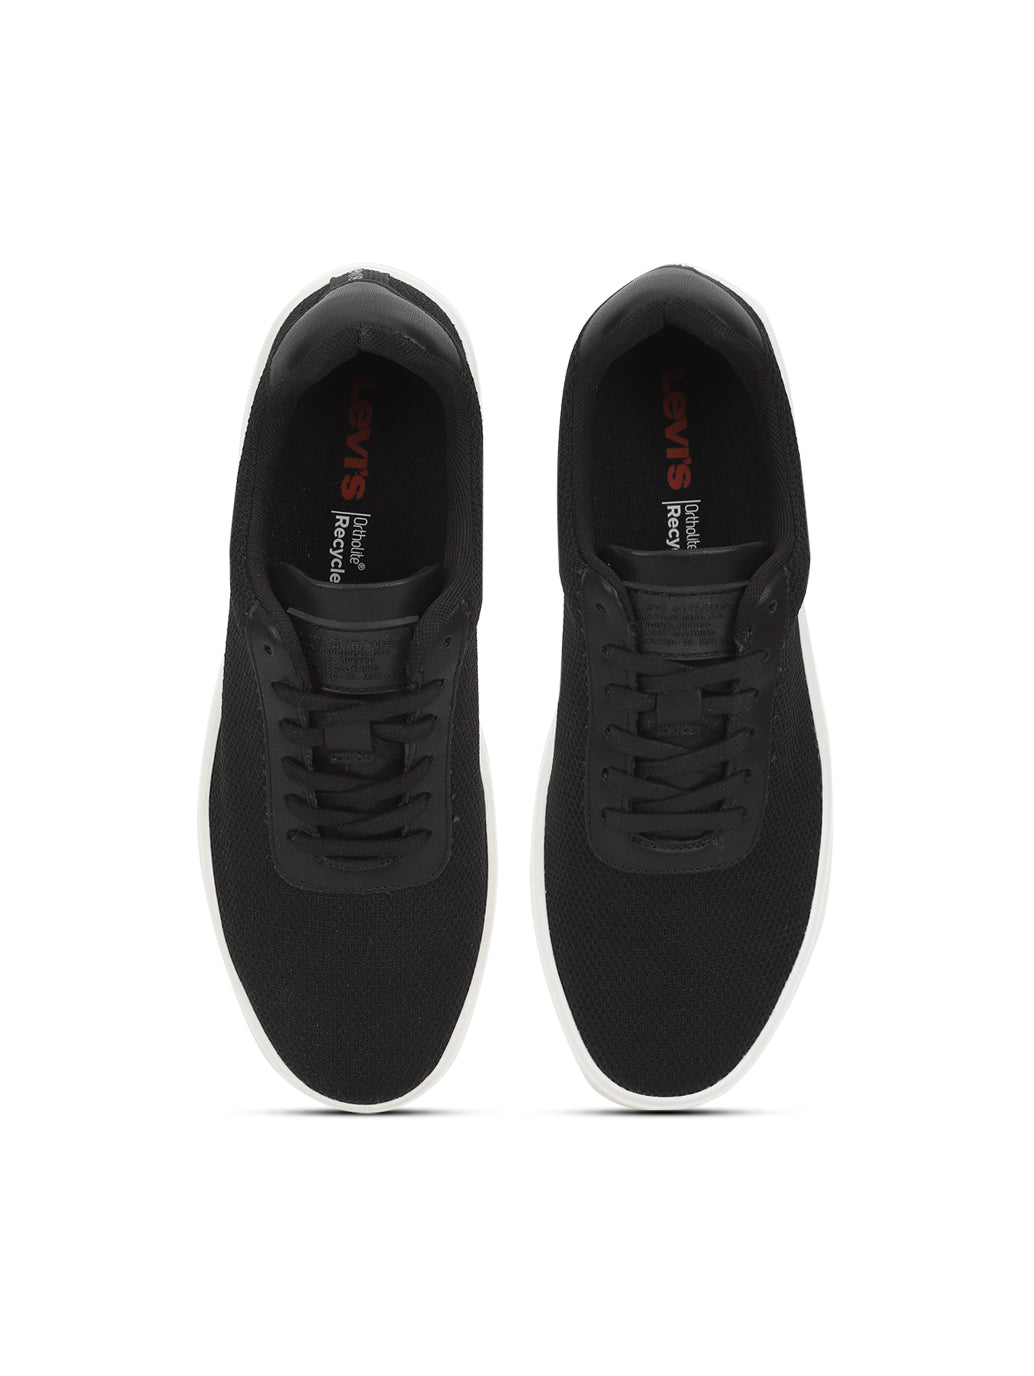 Men's Street Black Casual Sneakers